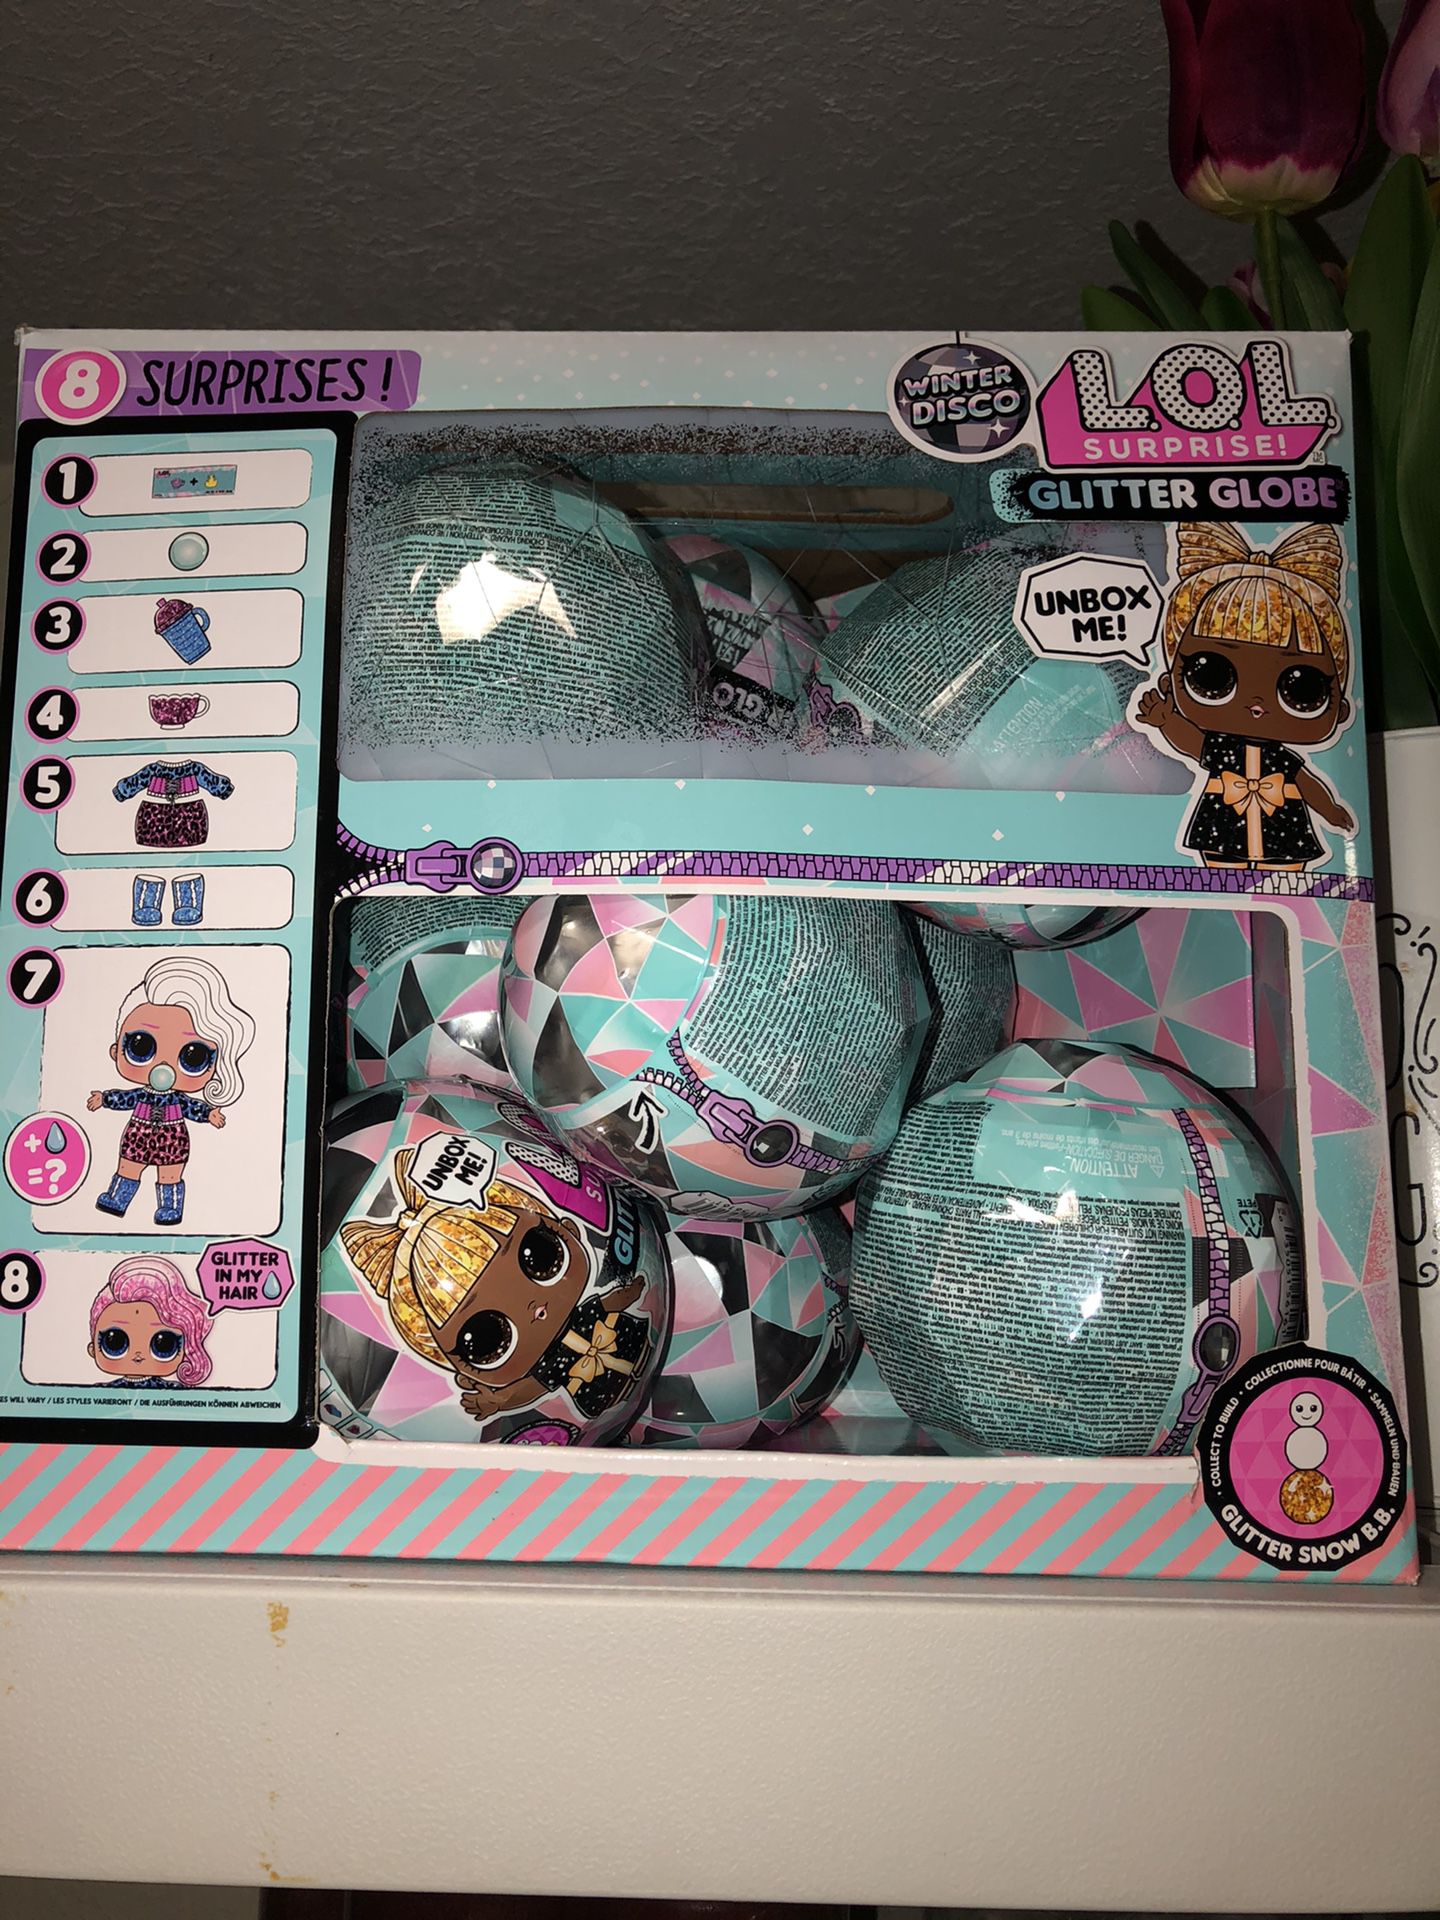 Lol surprise toys. 10$ each glitter globes